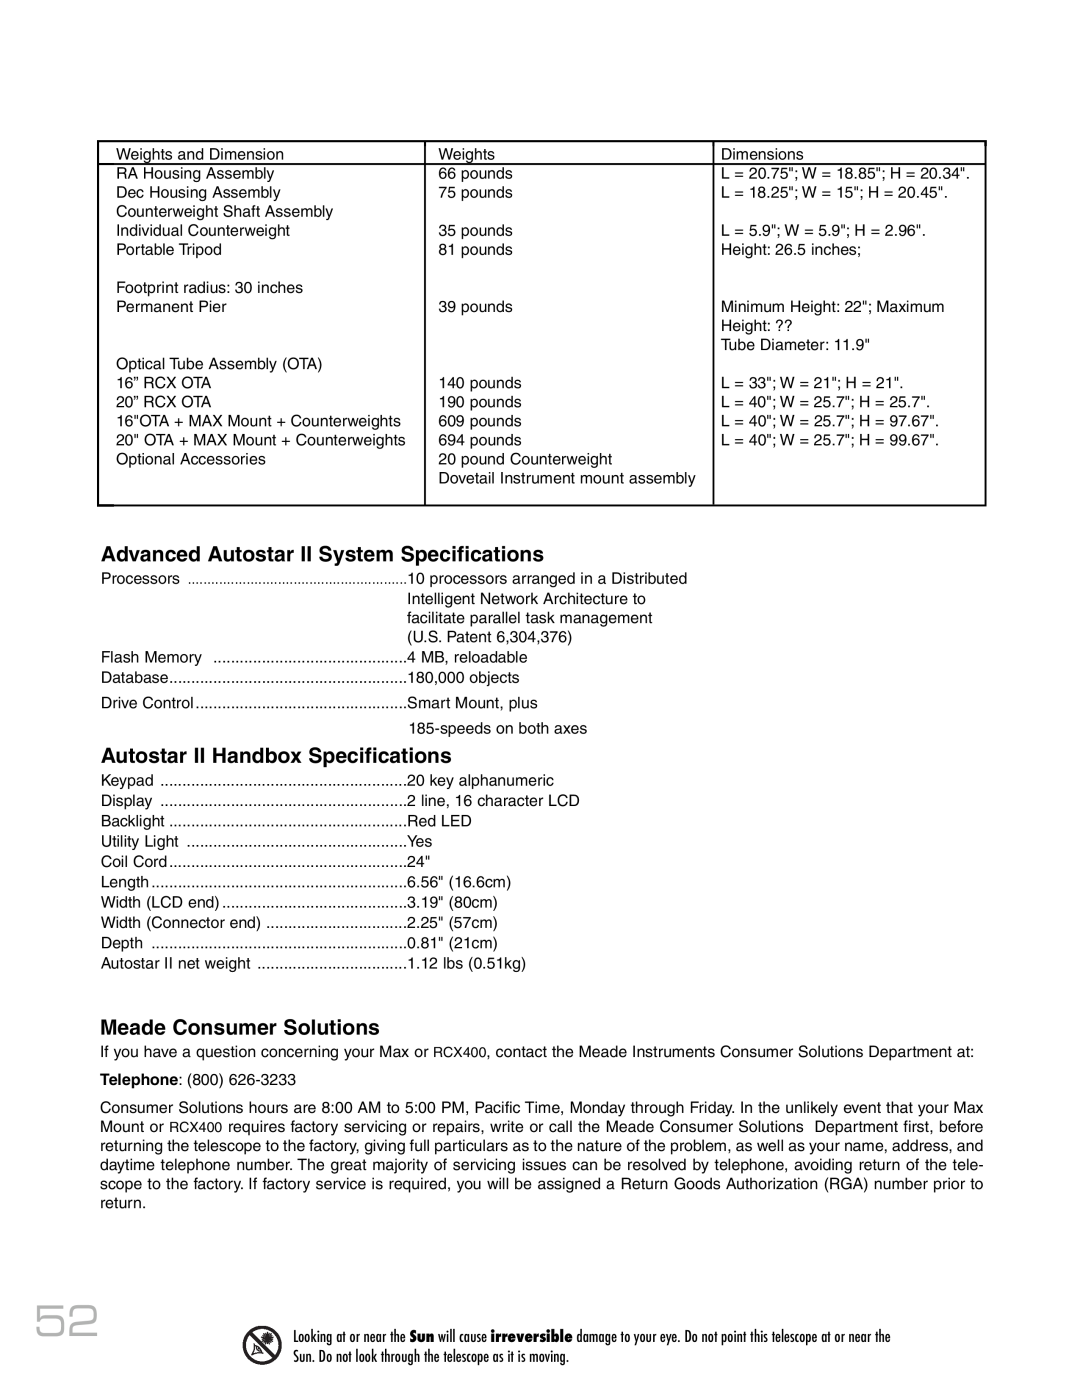 Meade RCX400 Advanced Autostar II System Specifications, Autostar II Handbox Specifications, Meade Consumer Solutions 